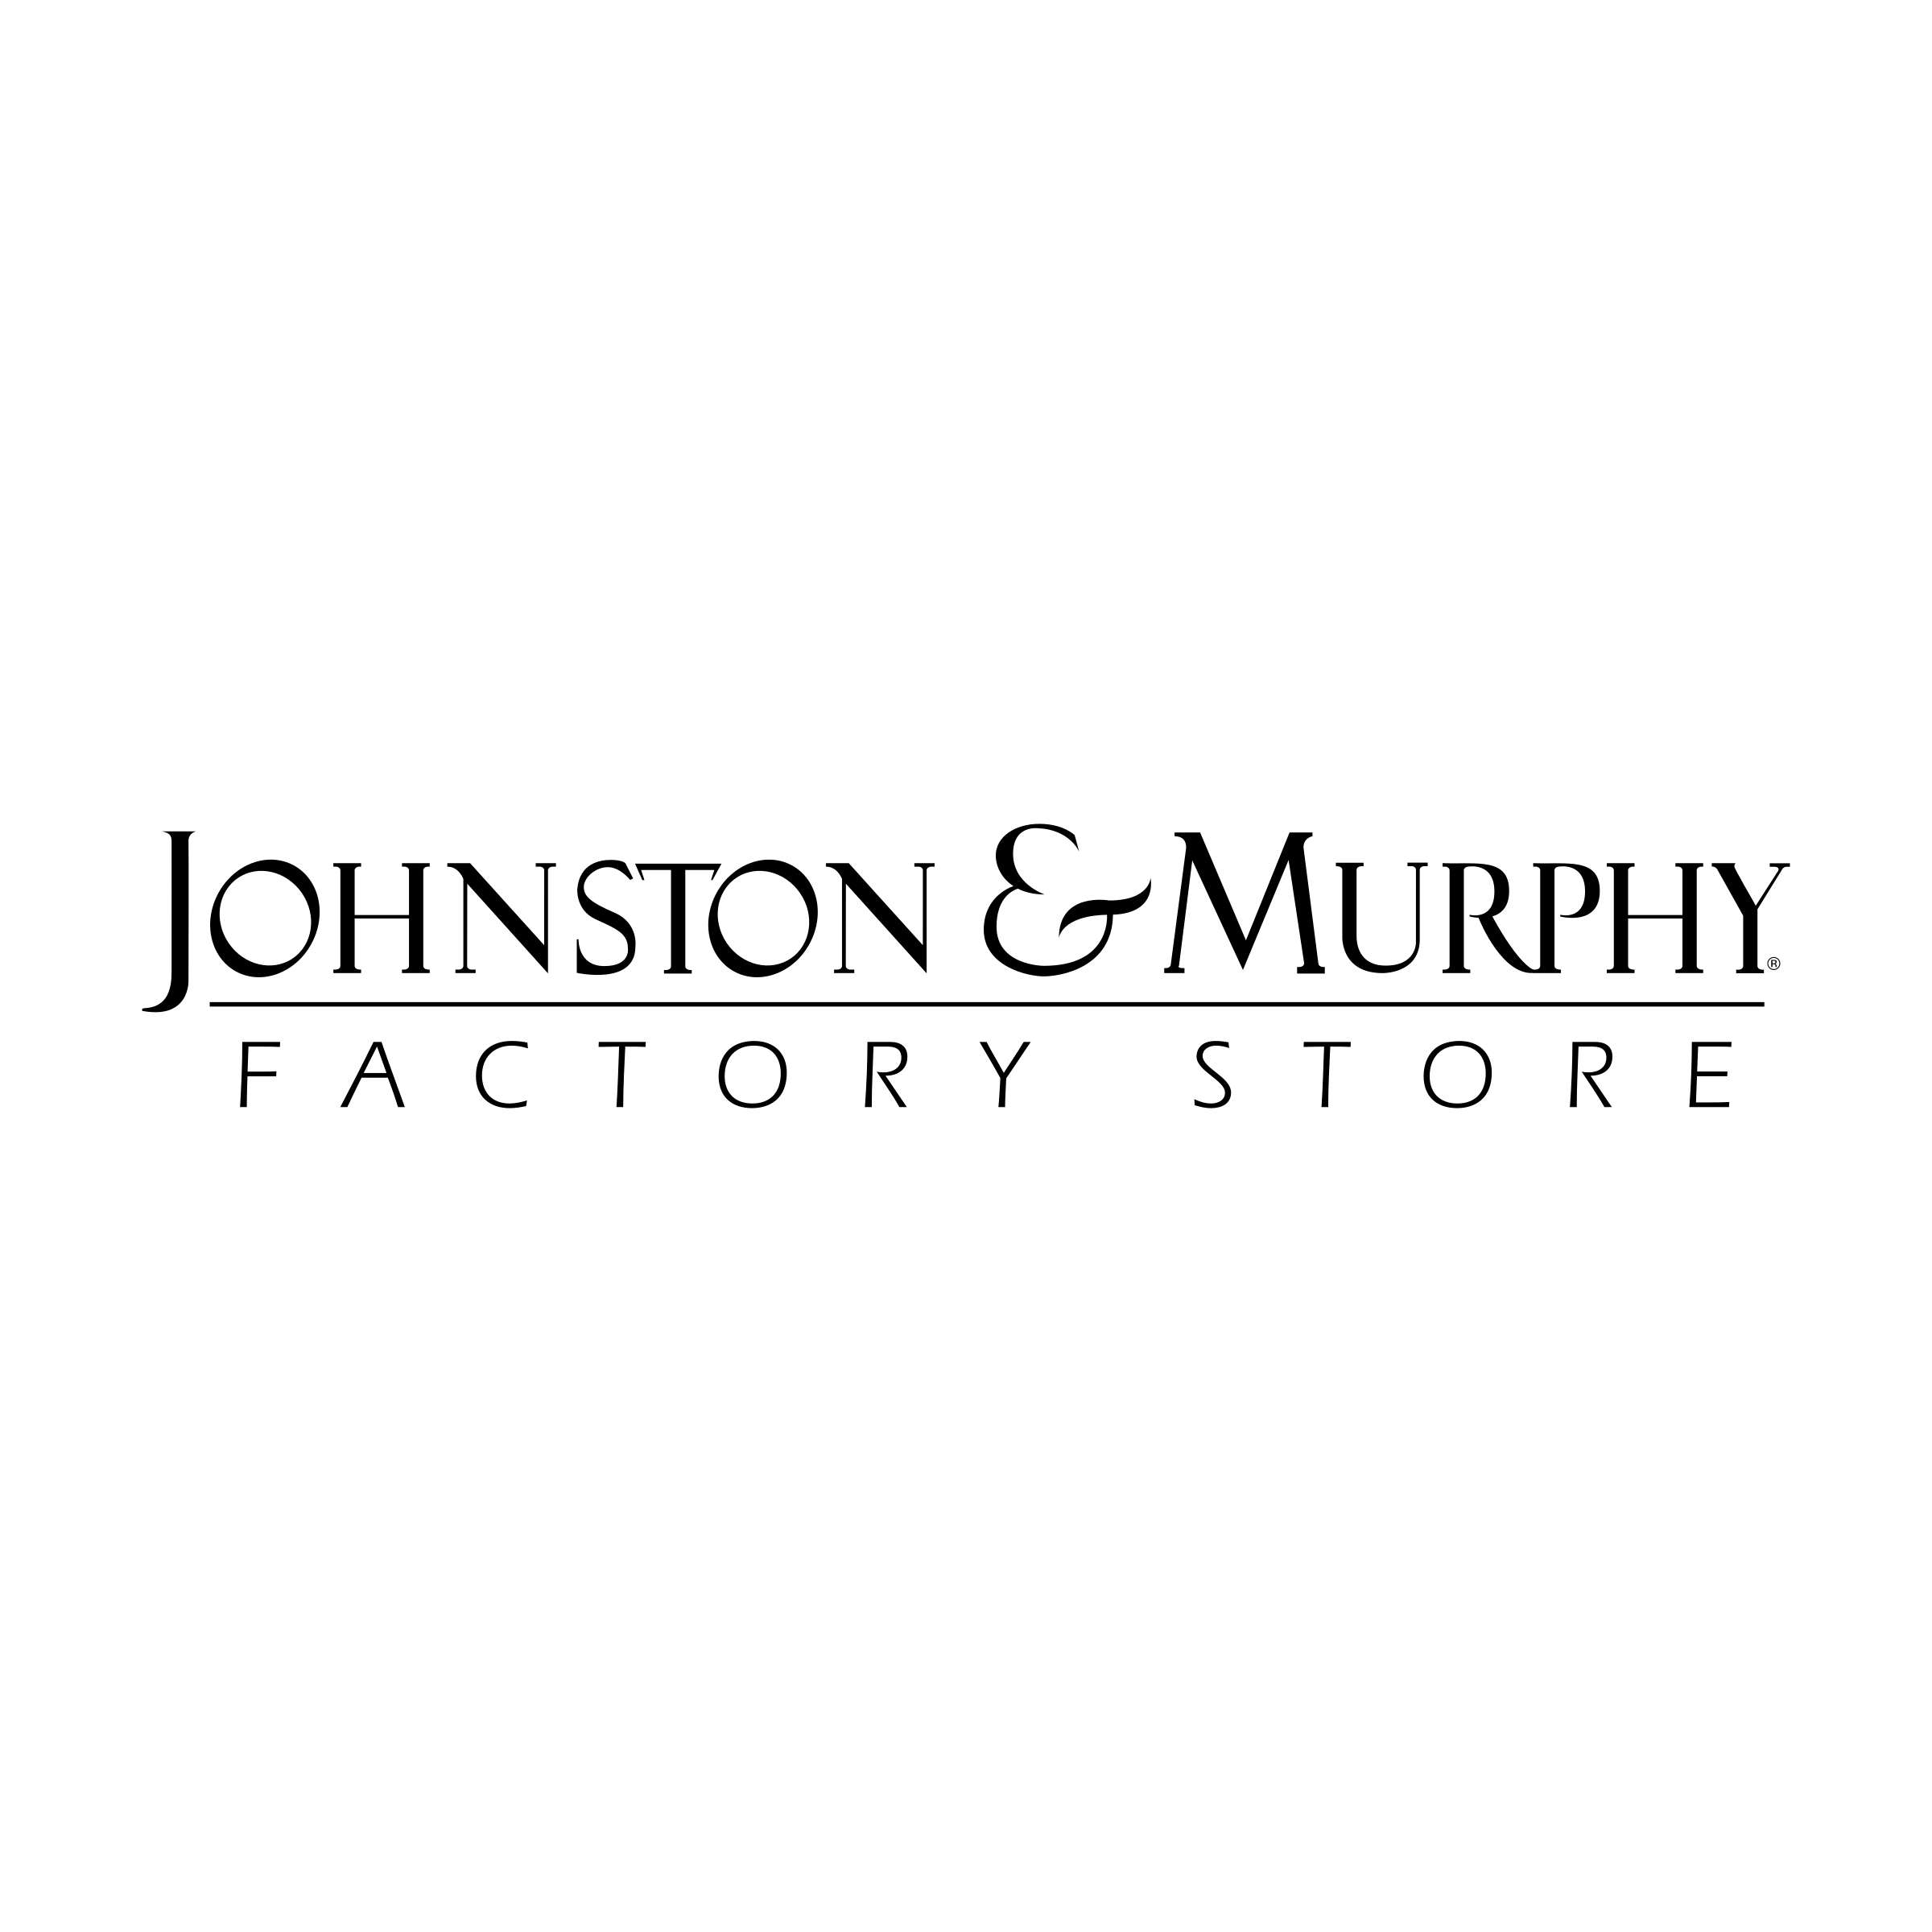 Murphy Logo - Johnston & Murphy Logo PNG Transparent & SVG Vector - Freebie Supply